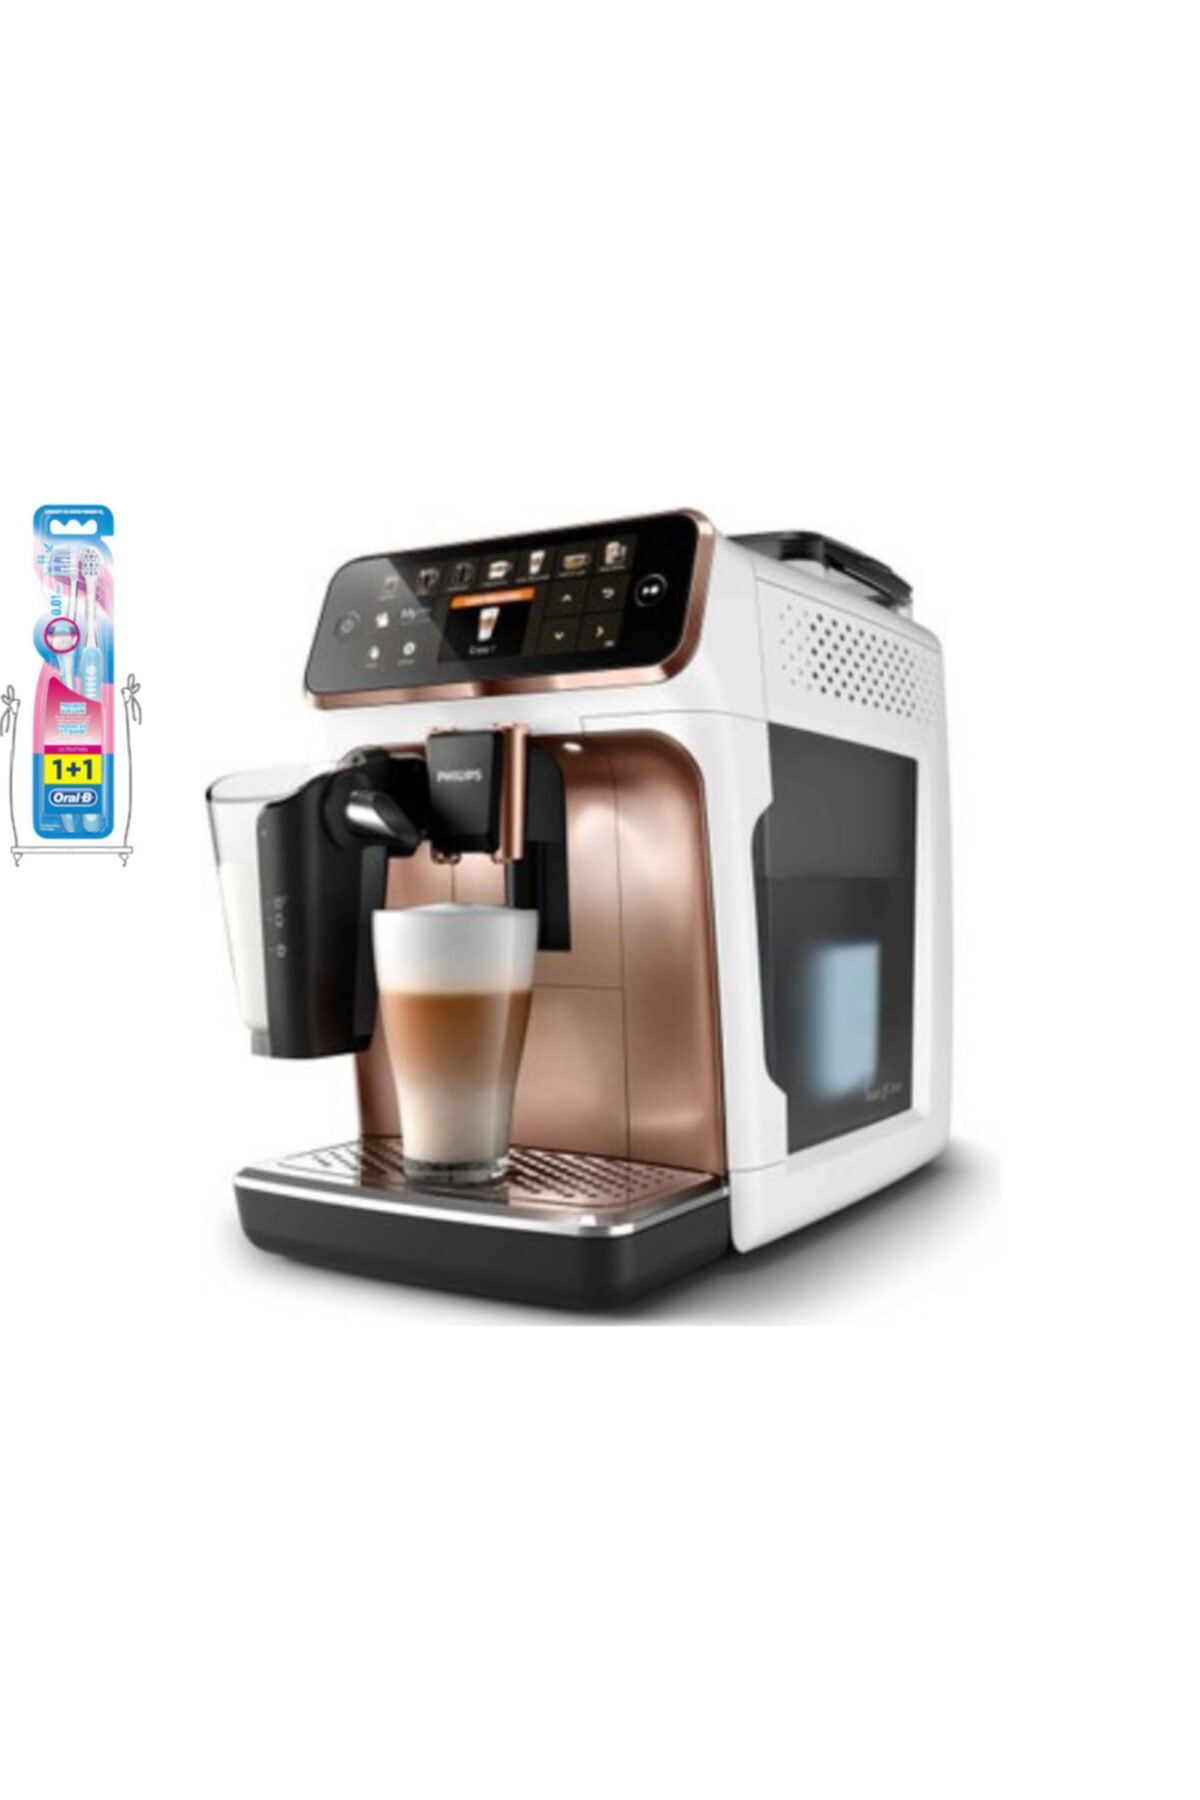 Philips 5400serisi Tam Otomatik Espresso Makinesi Krom 2021seri Ep5400 *hediyeli